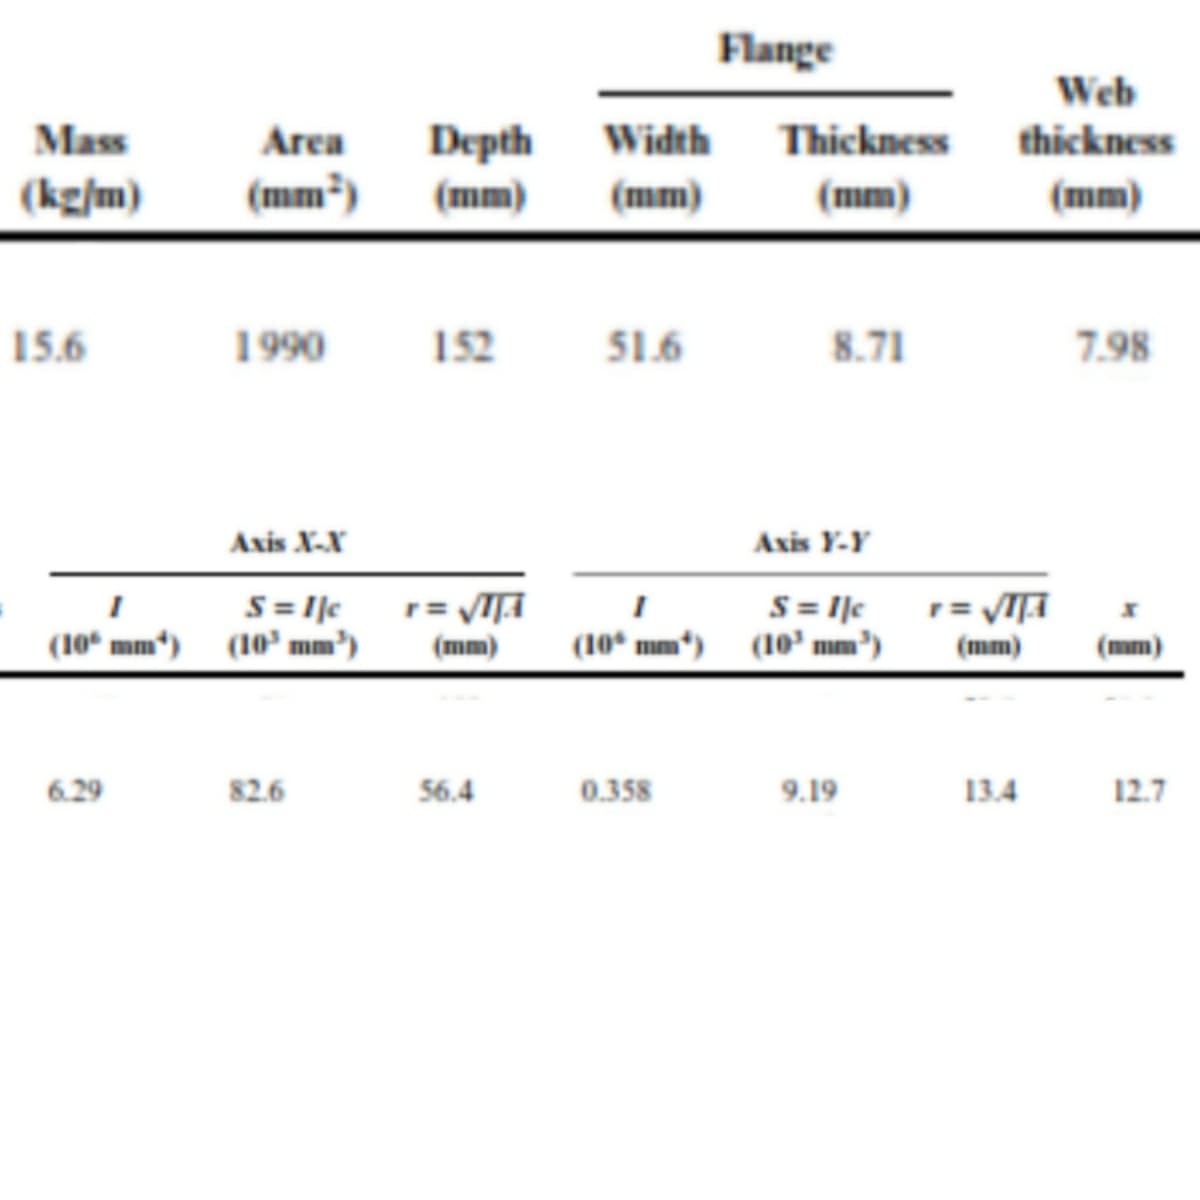 Flange
Web
thickness
Mass
Area
Depth
Width
Thickness
(kg/m)
(mm³)
(mm)
(mm)
(mm)
(mm)
15.6
1990
152
51.6
8.71
7.98
Axis X-X
Axis Y-Y
S= IJc
(10* mm*) (10° mm')
S = lc
(10 mm) (10' mm")
(mm)
(mm)
(mm)
6.29
82.6
56.4
0.358
9.19
13.4
12.7
